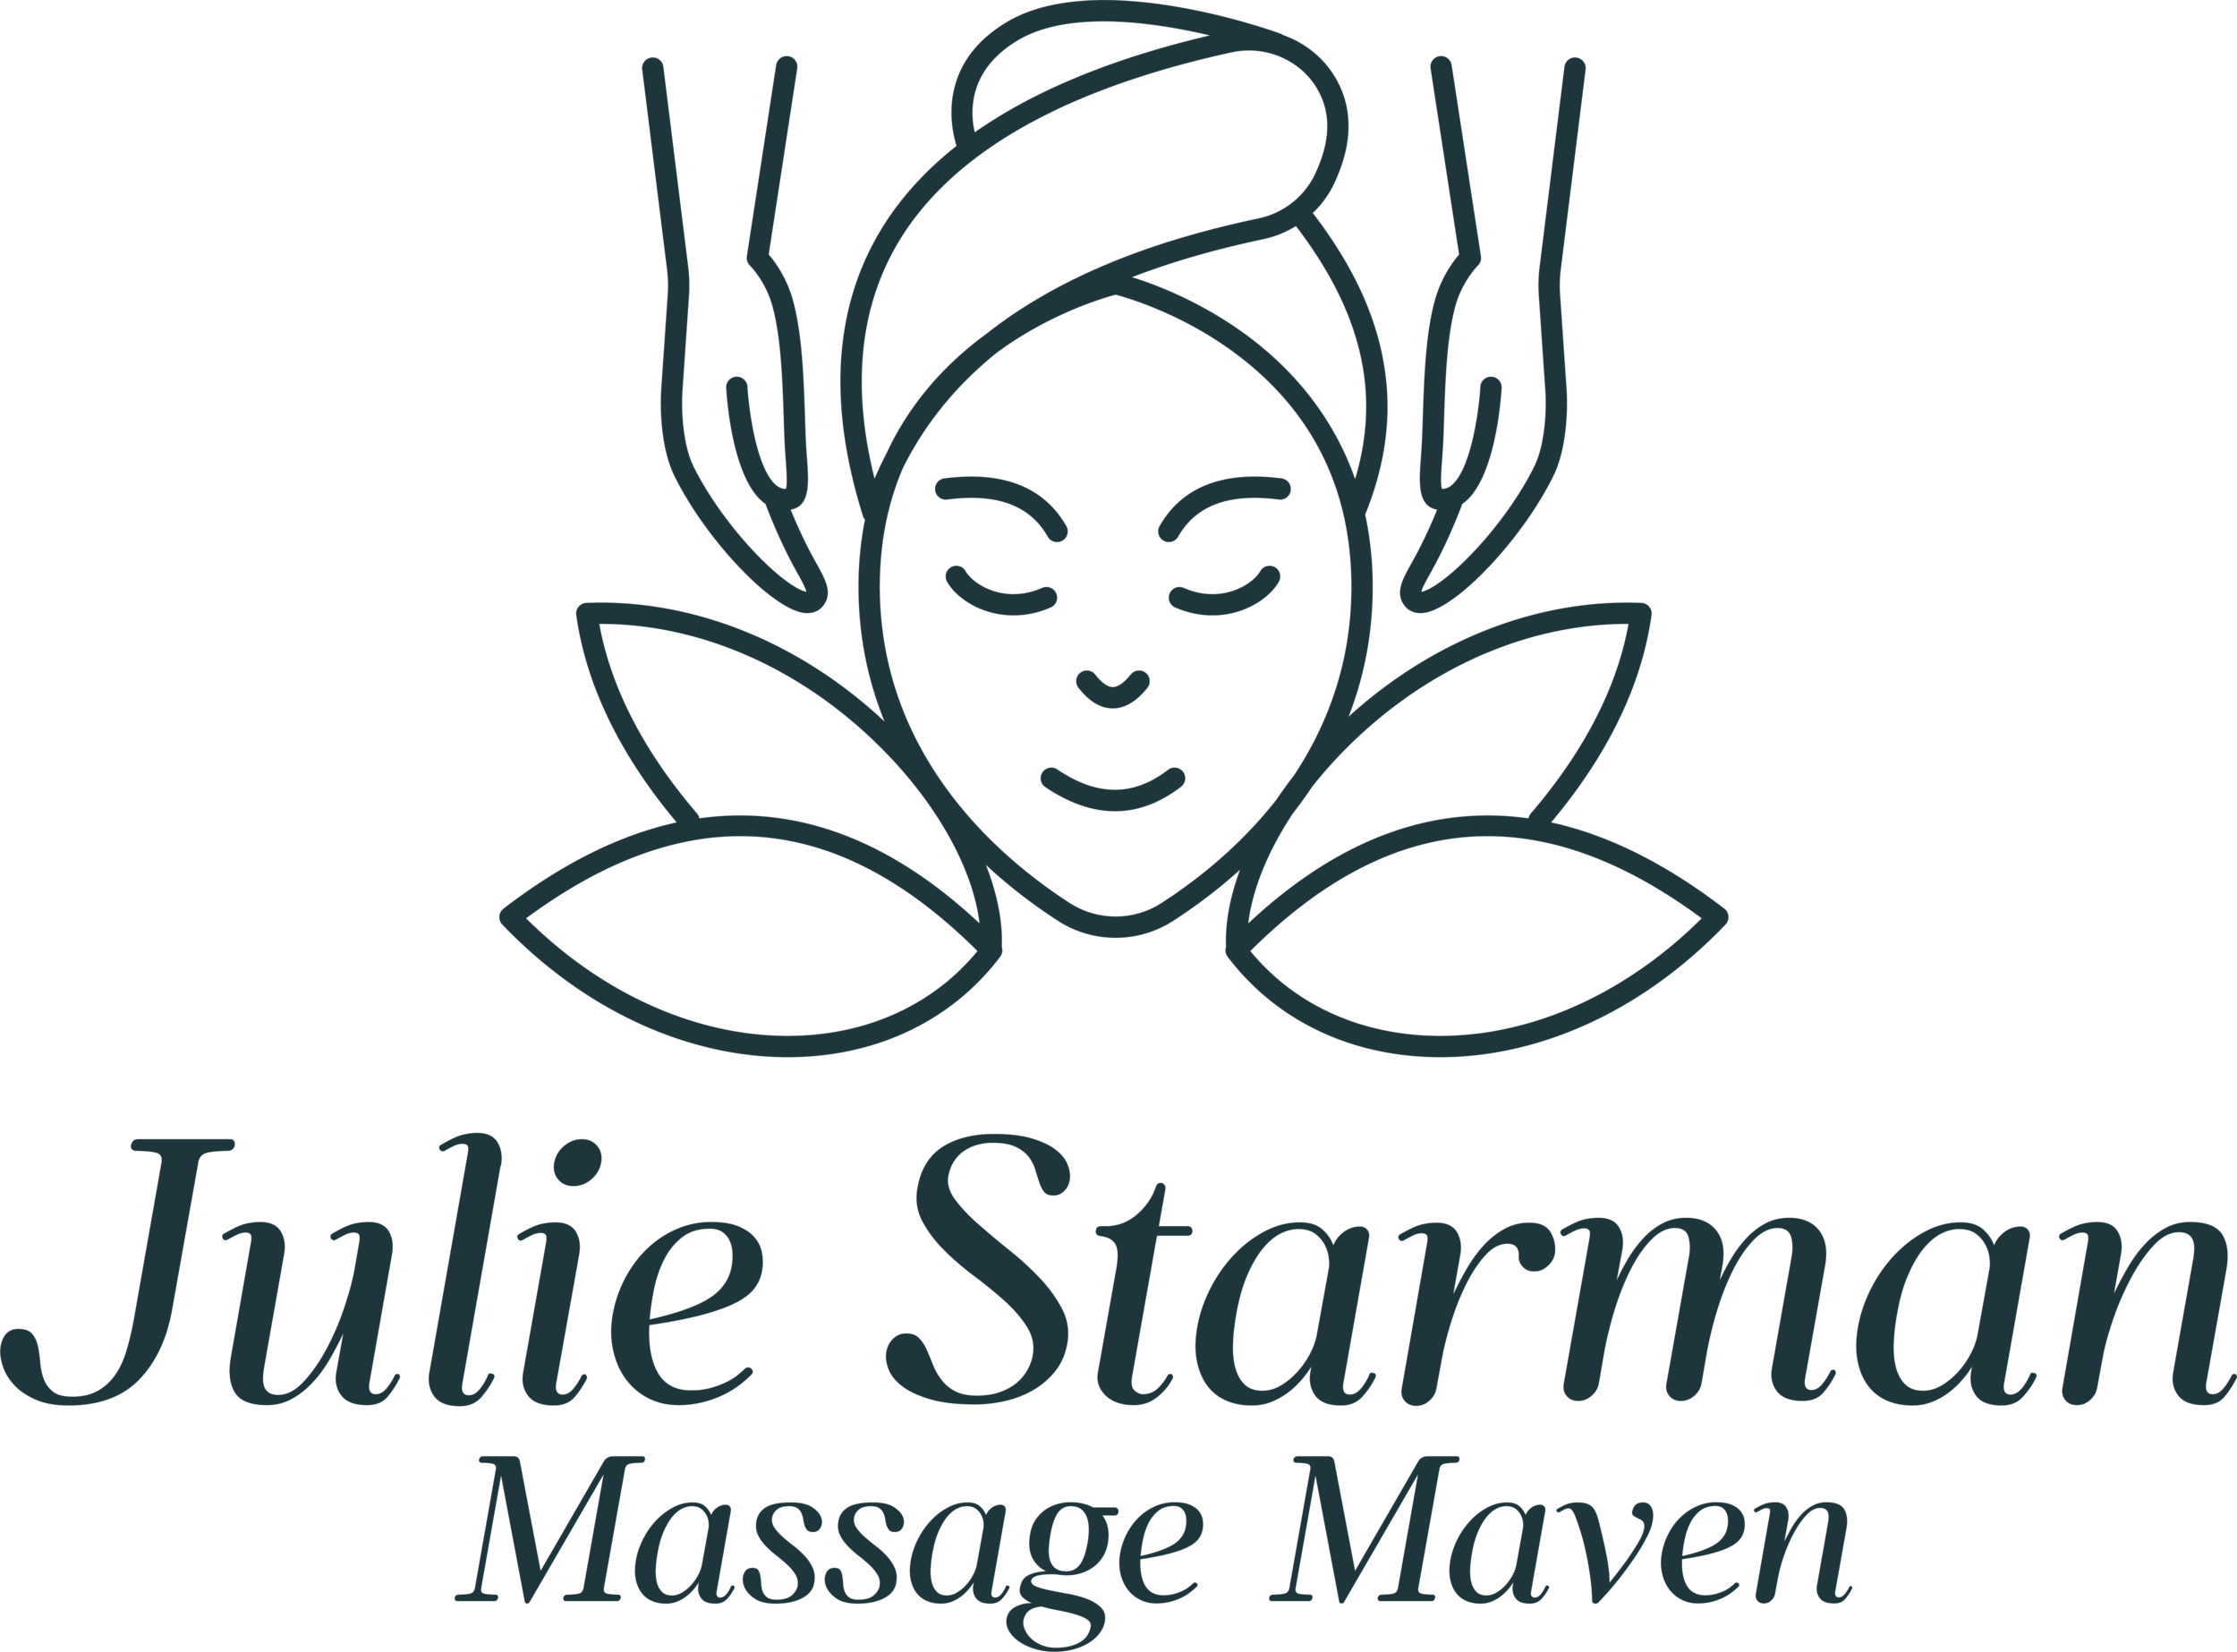 Julie Starman, Massage Maven